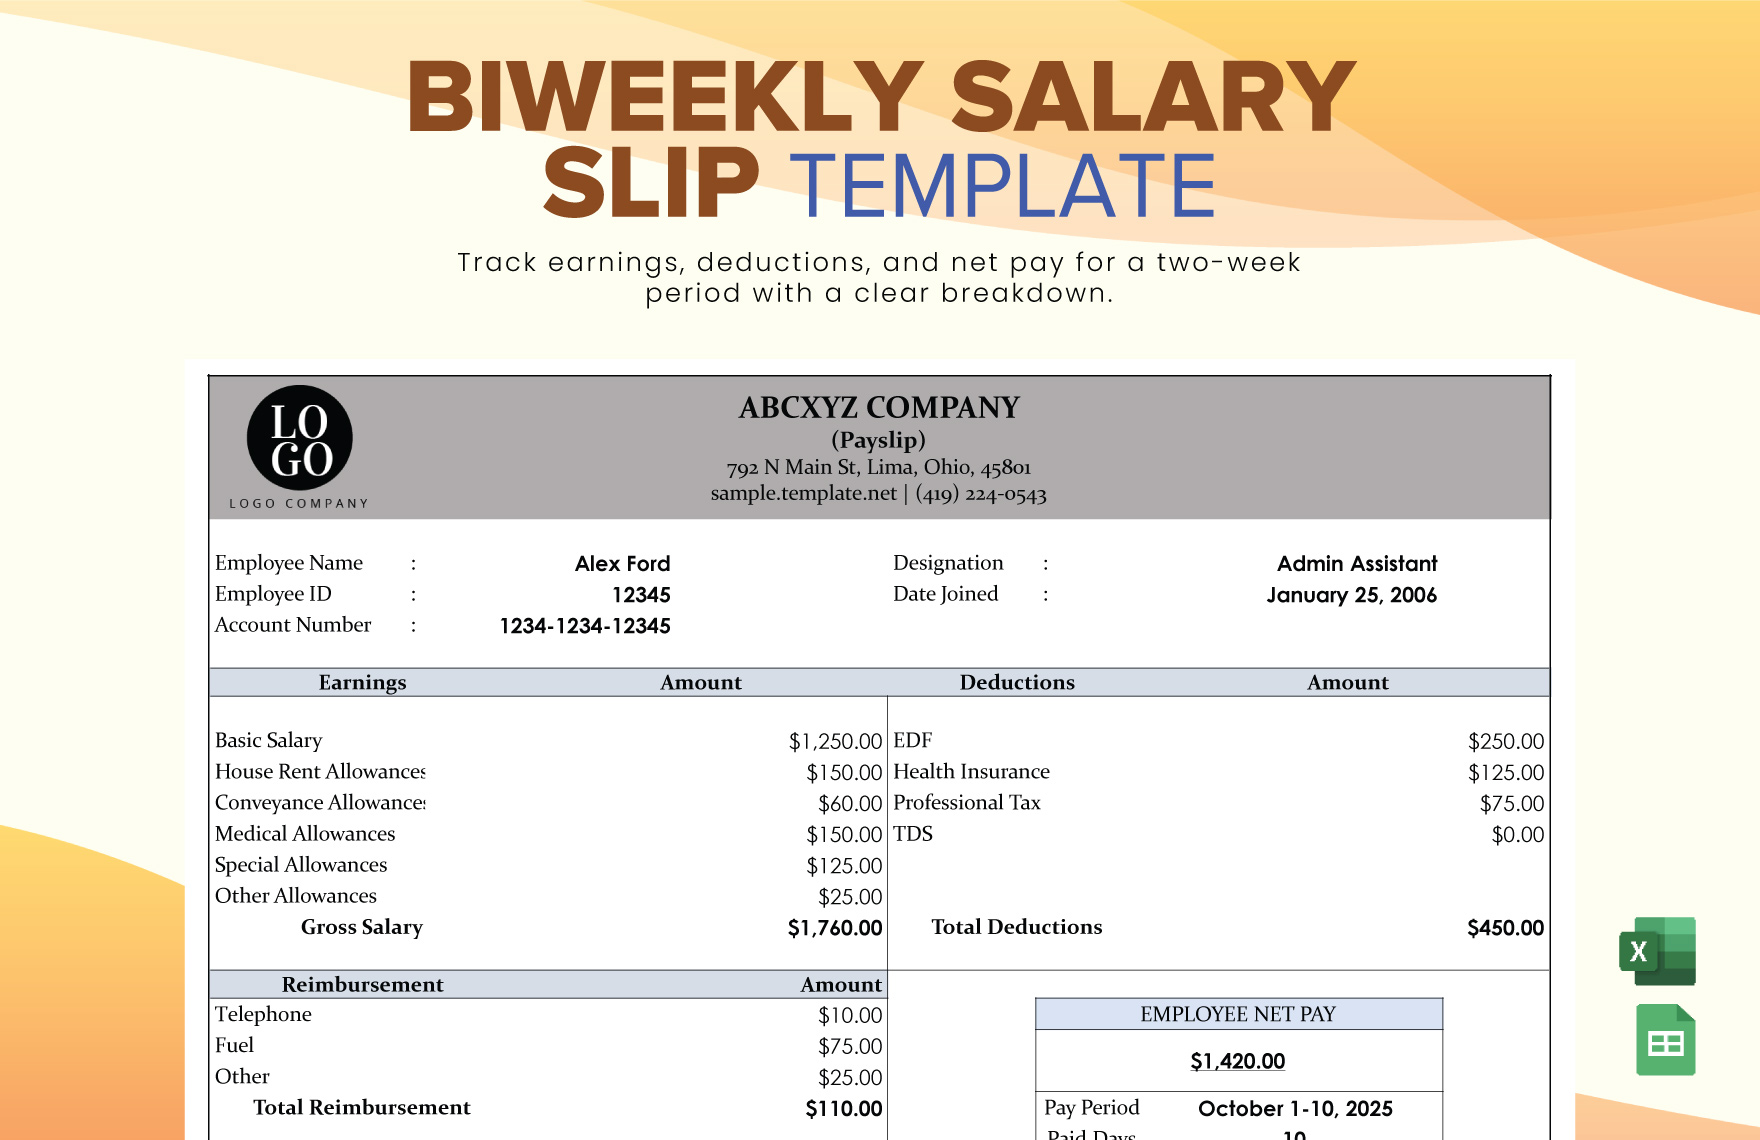 Biweekly Salary Slip in Excel, Google Sheets